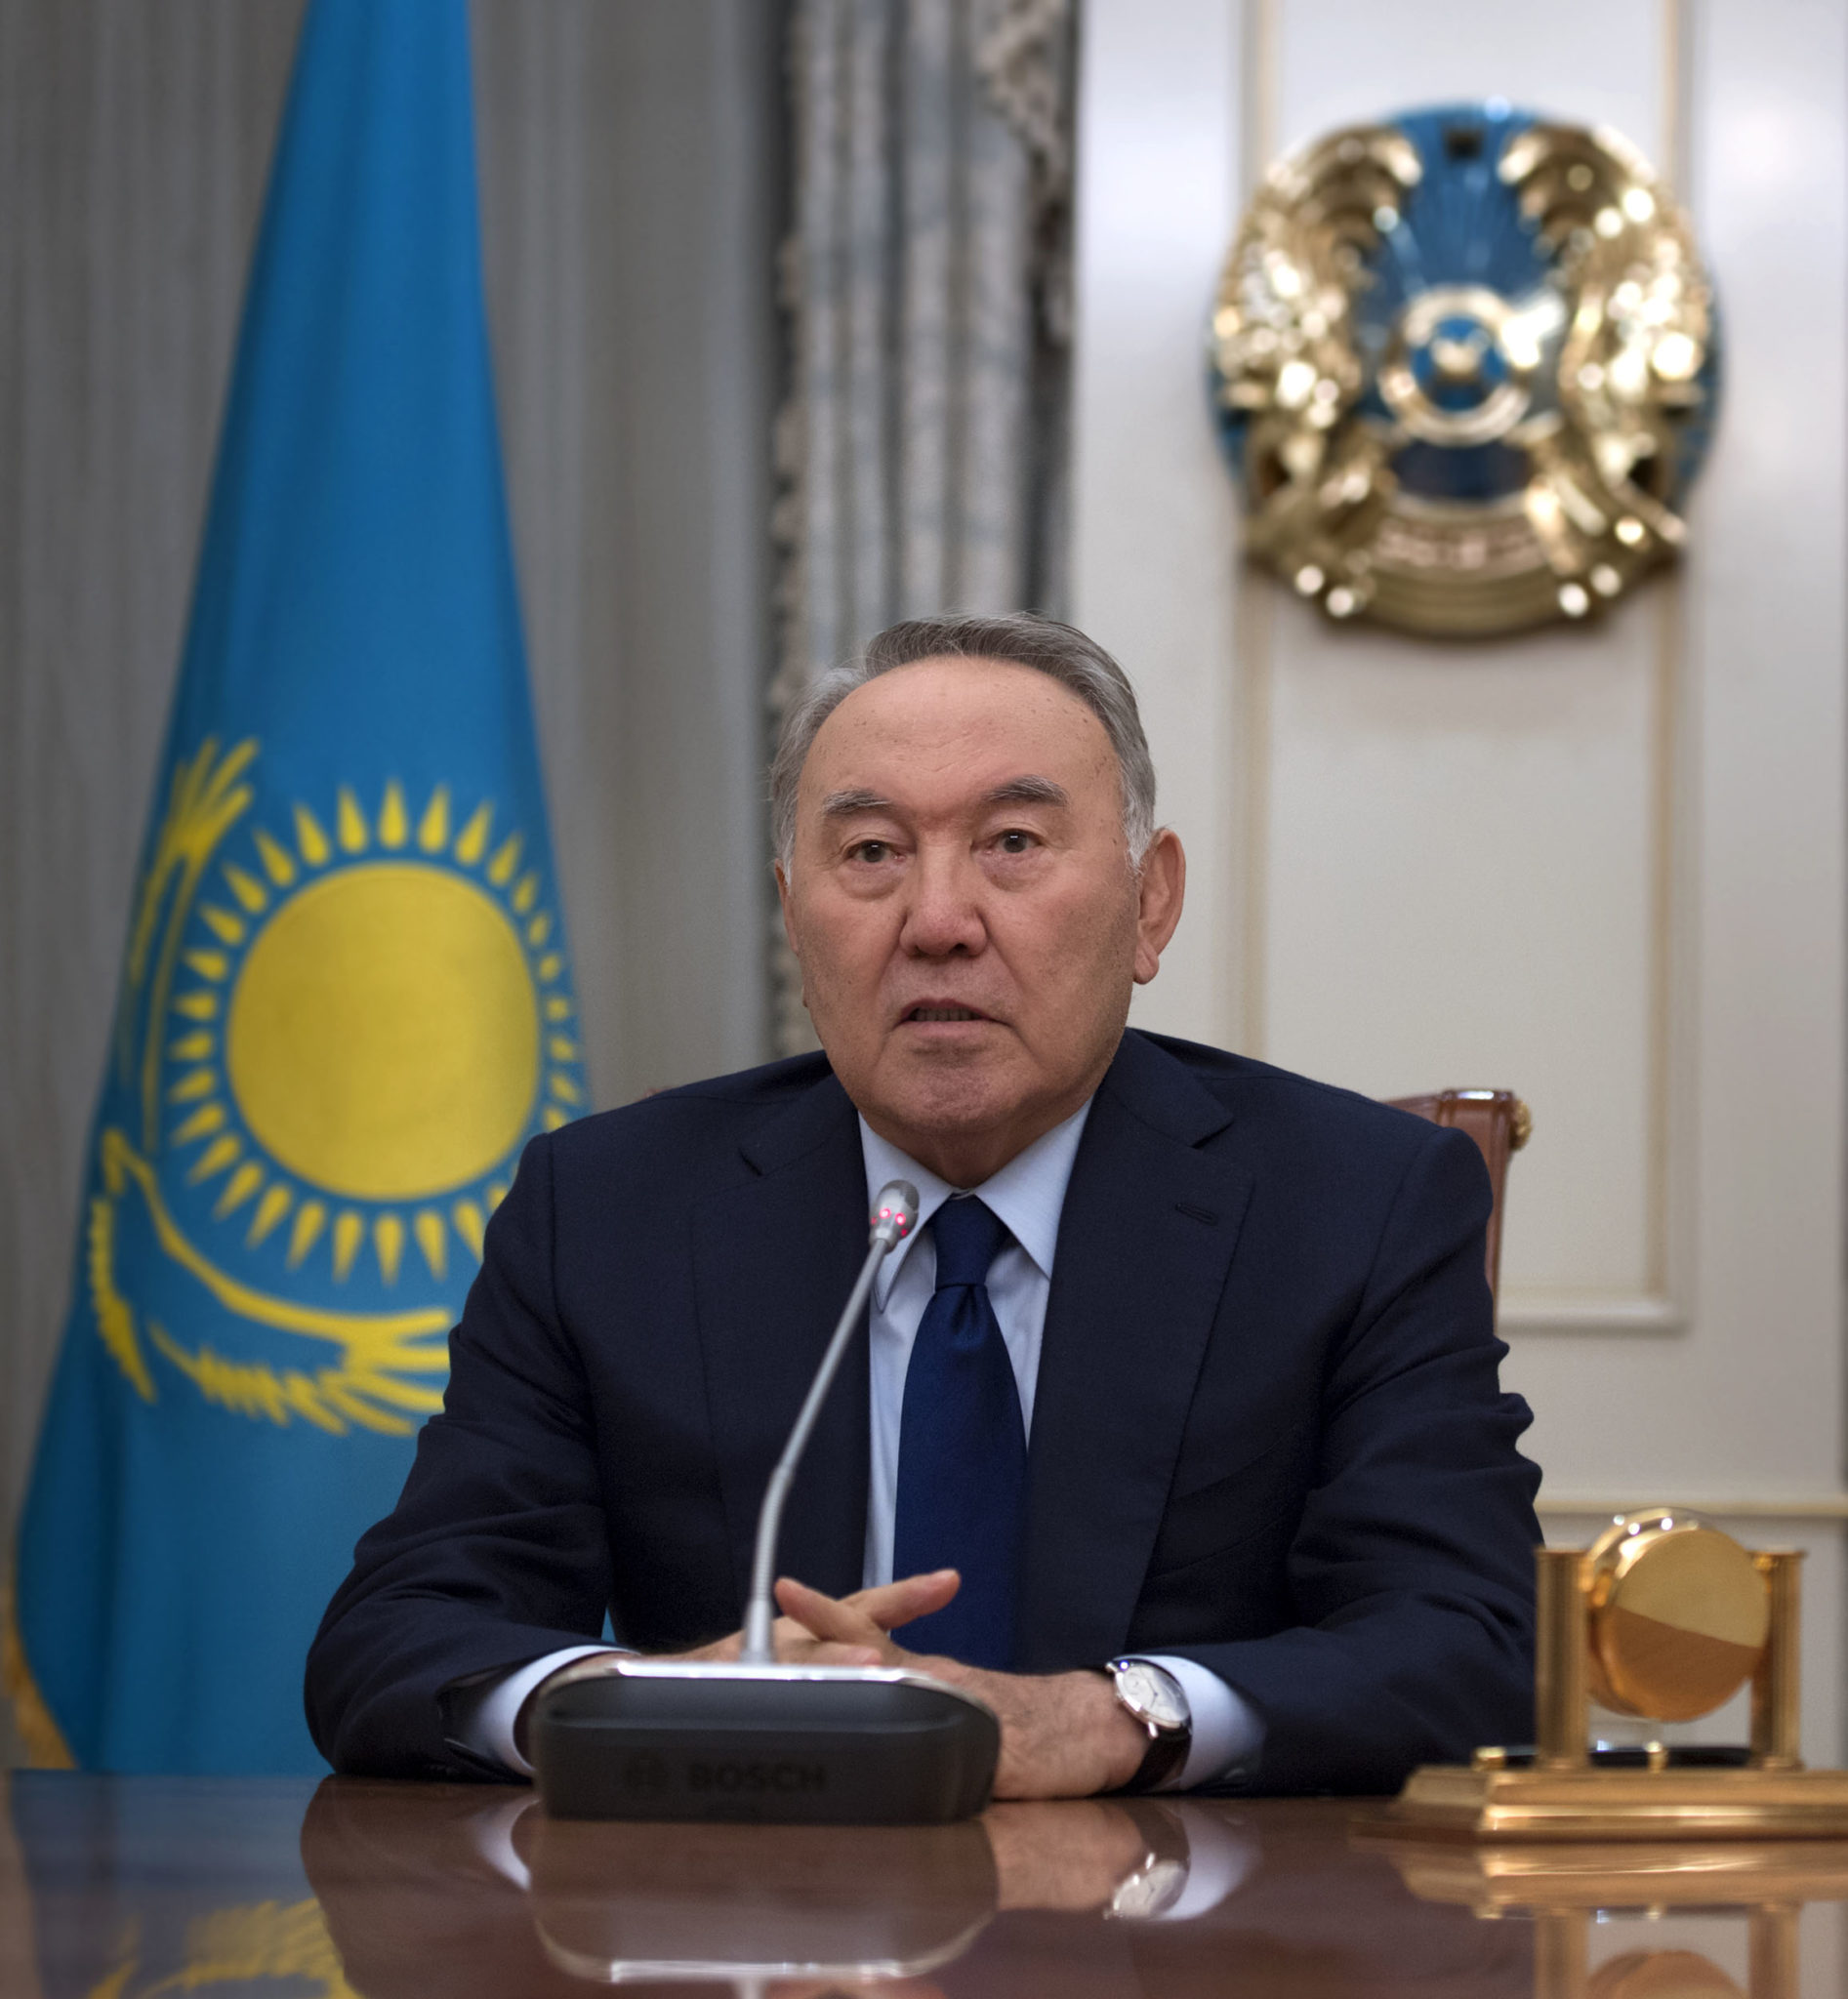 Kazakistan'da hükümet istifa etti kazakistan.kz Kazakistan'dan